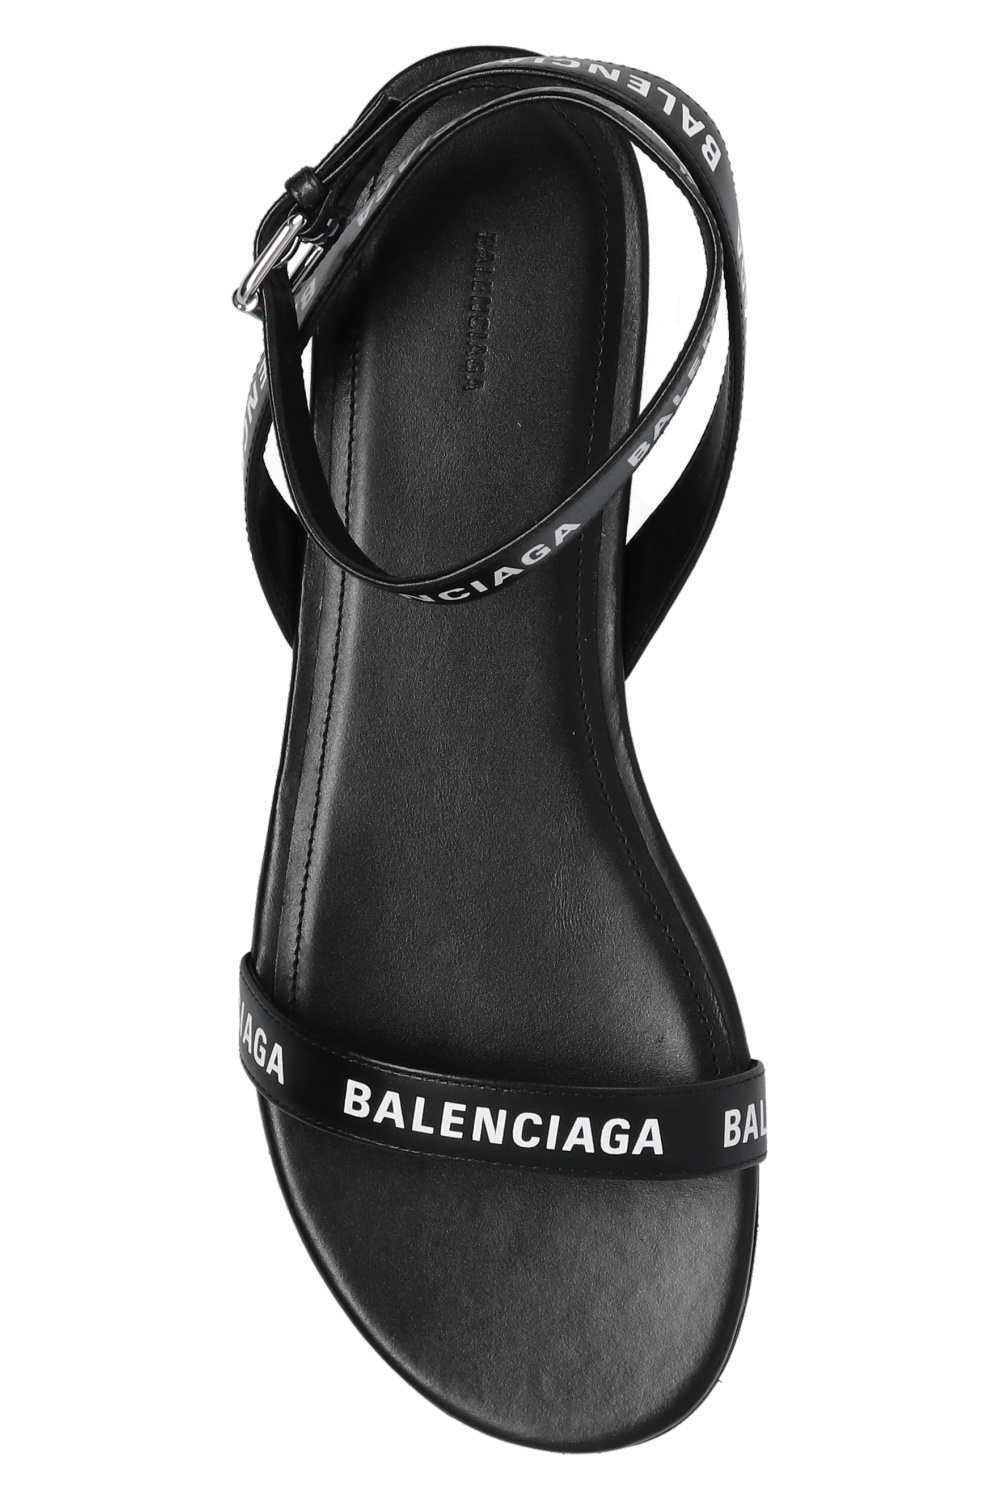 Balenciaga Womens Brooks Divide 3 Running Shoes